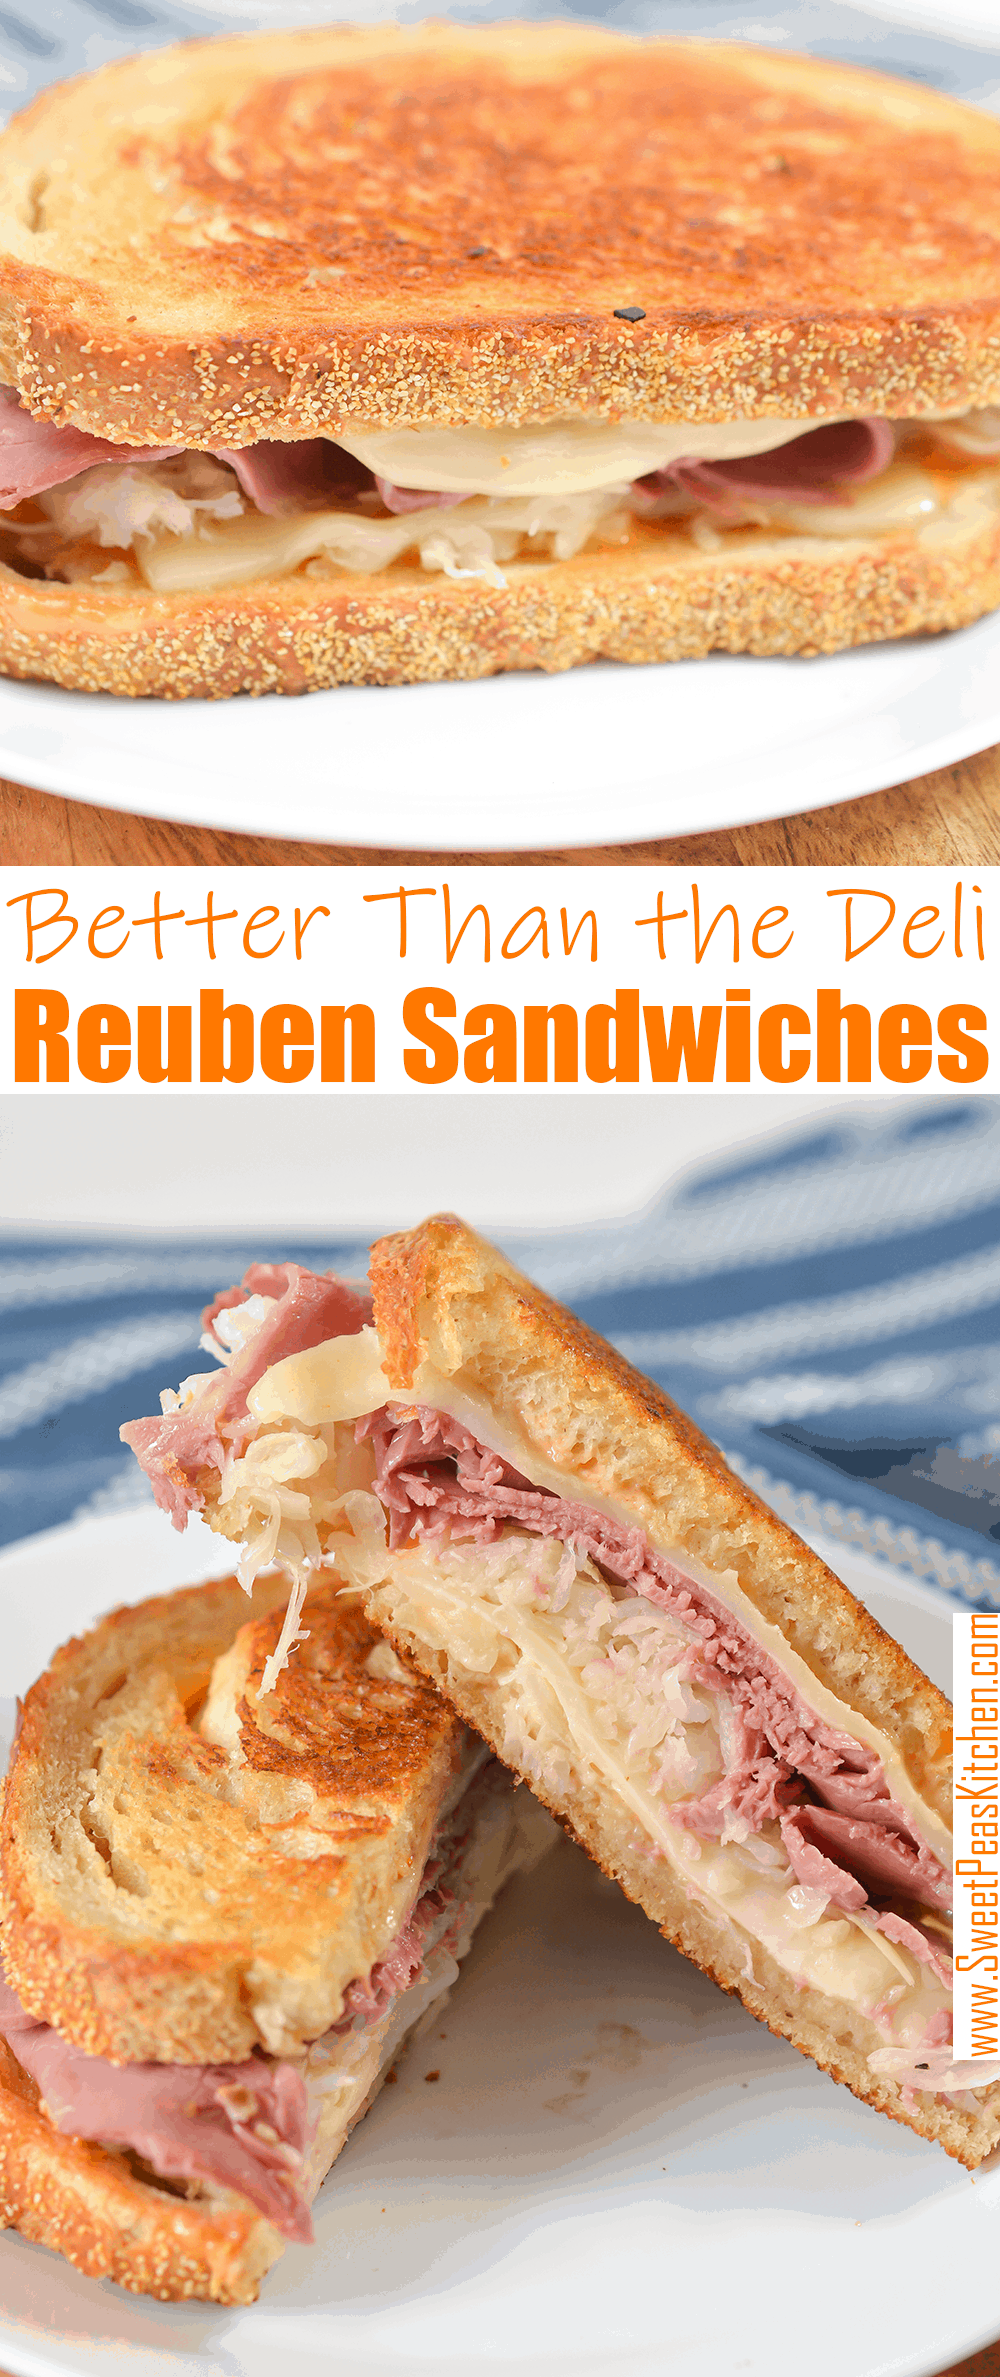 Better Than the Deli Reuben Sandwiches